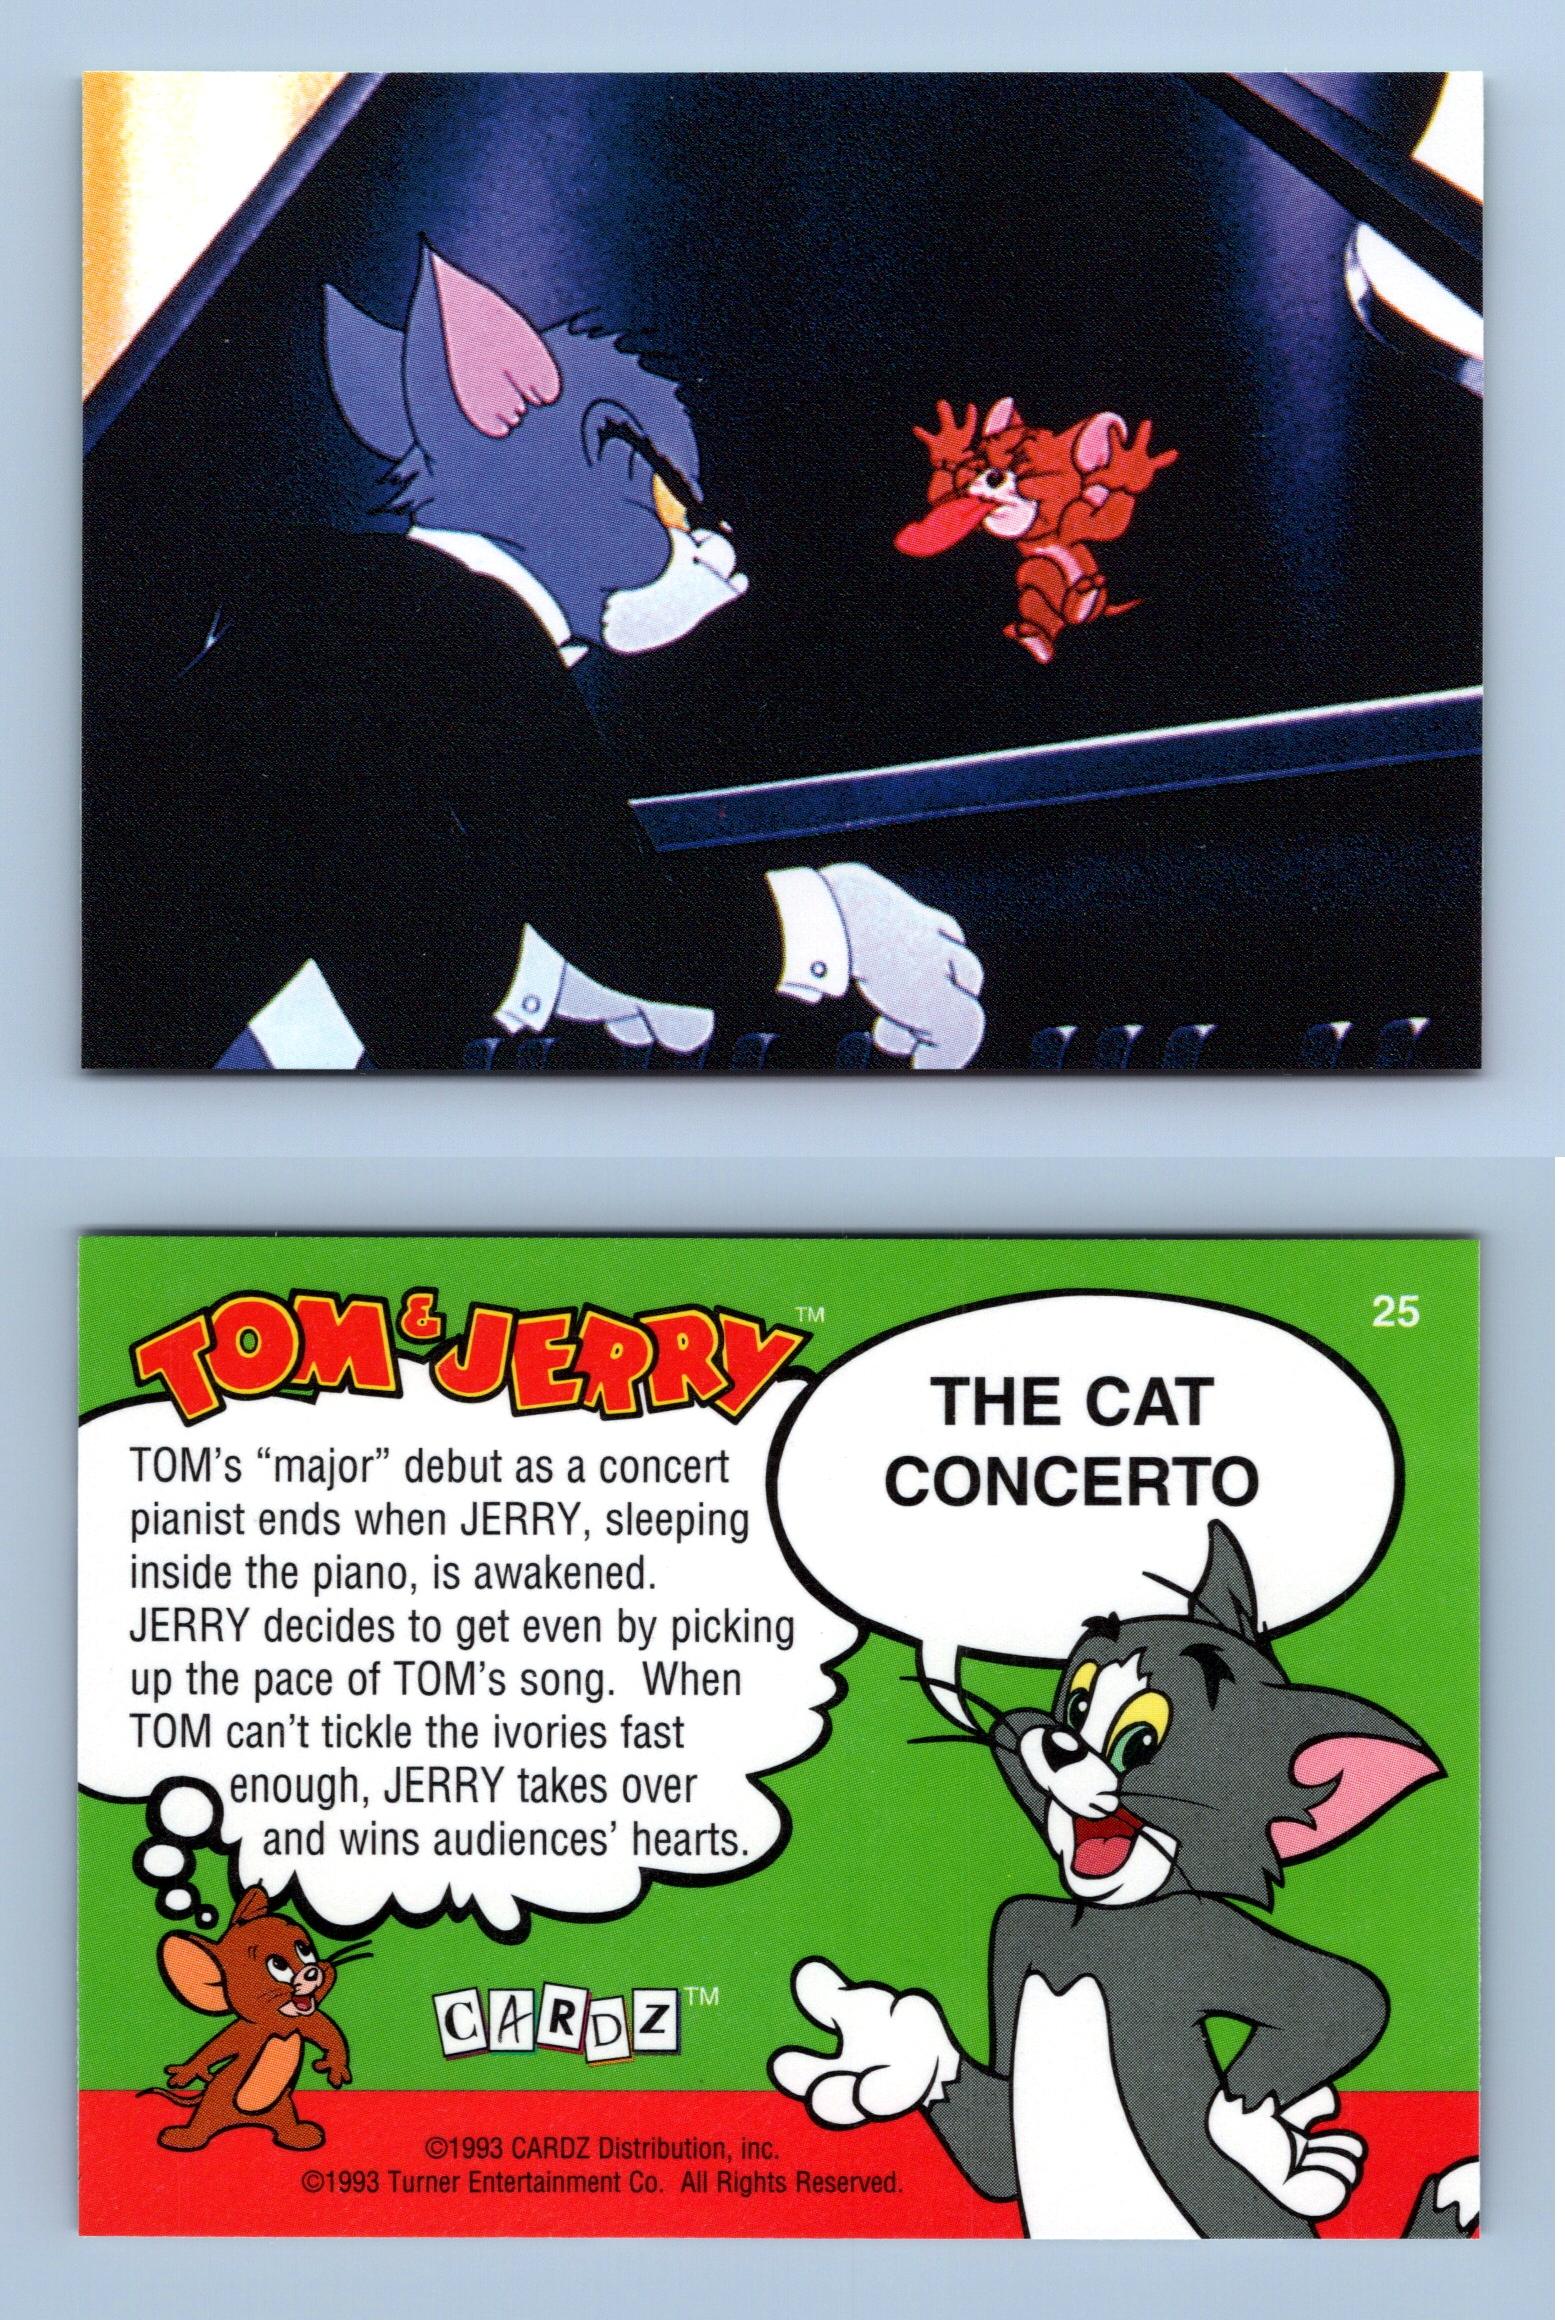 The Cat Concerto #25 Tom & Jerry 1993 Cardz Trading Card